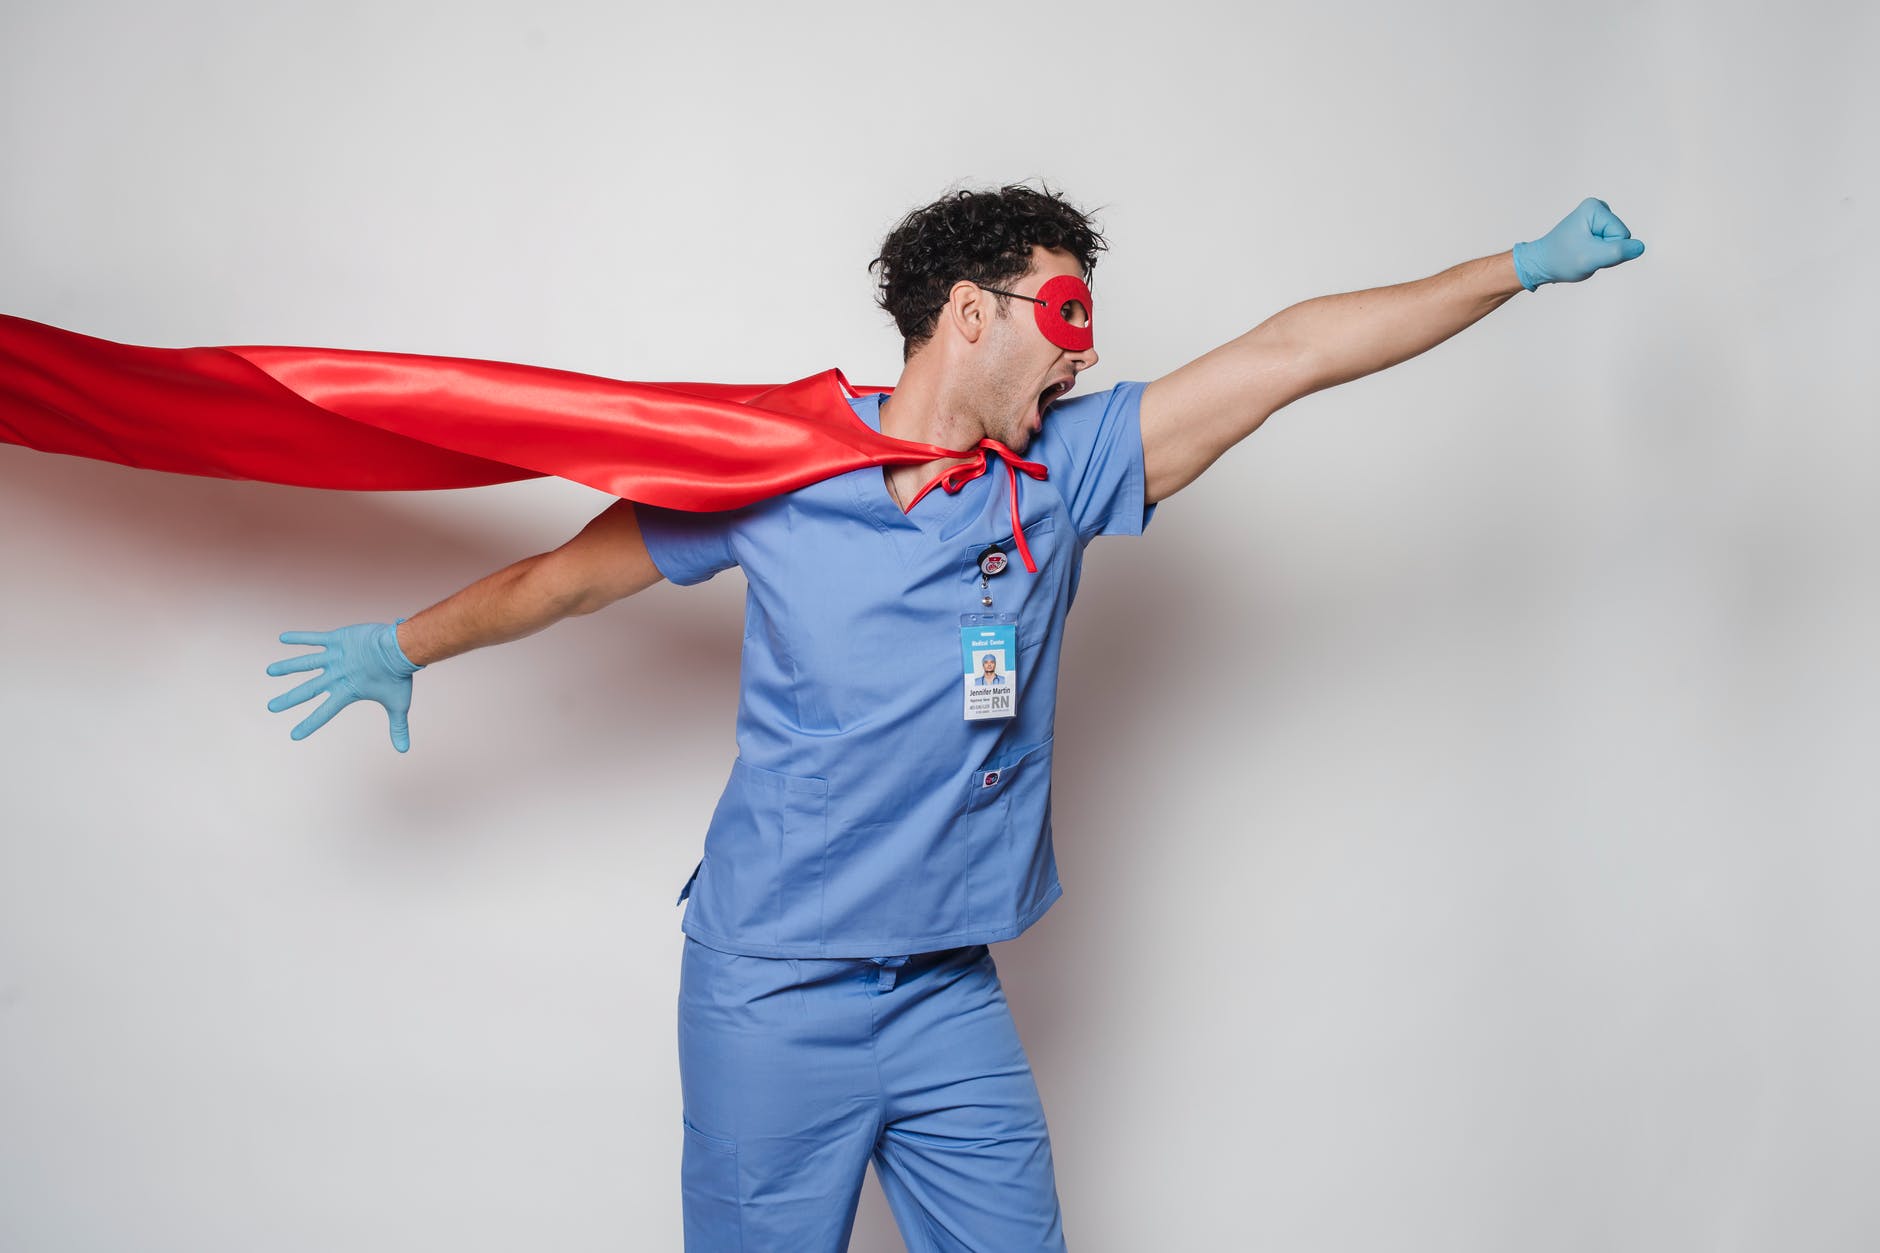 expressive doctor in superhero costume